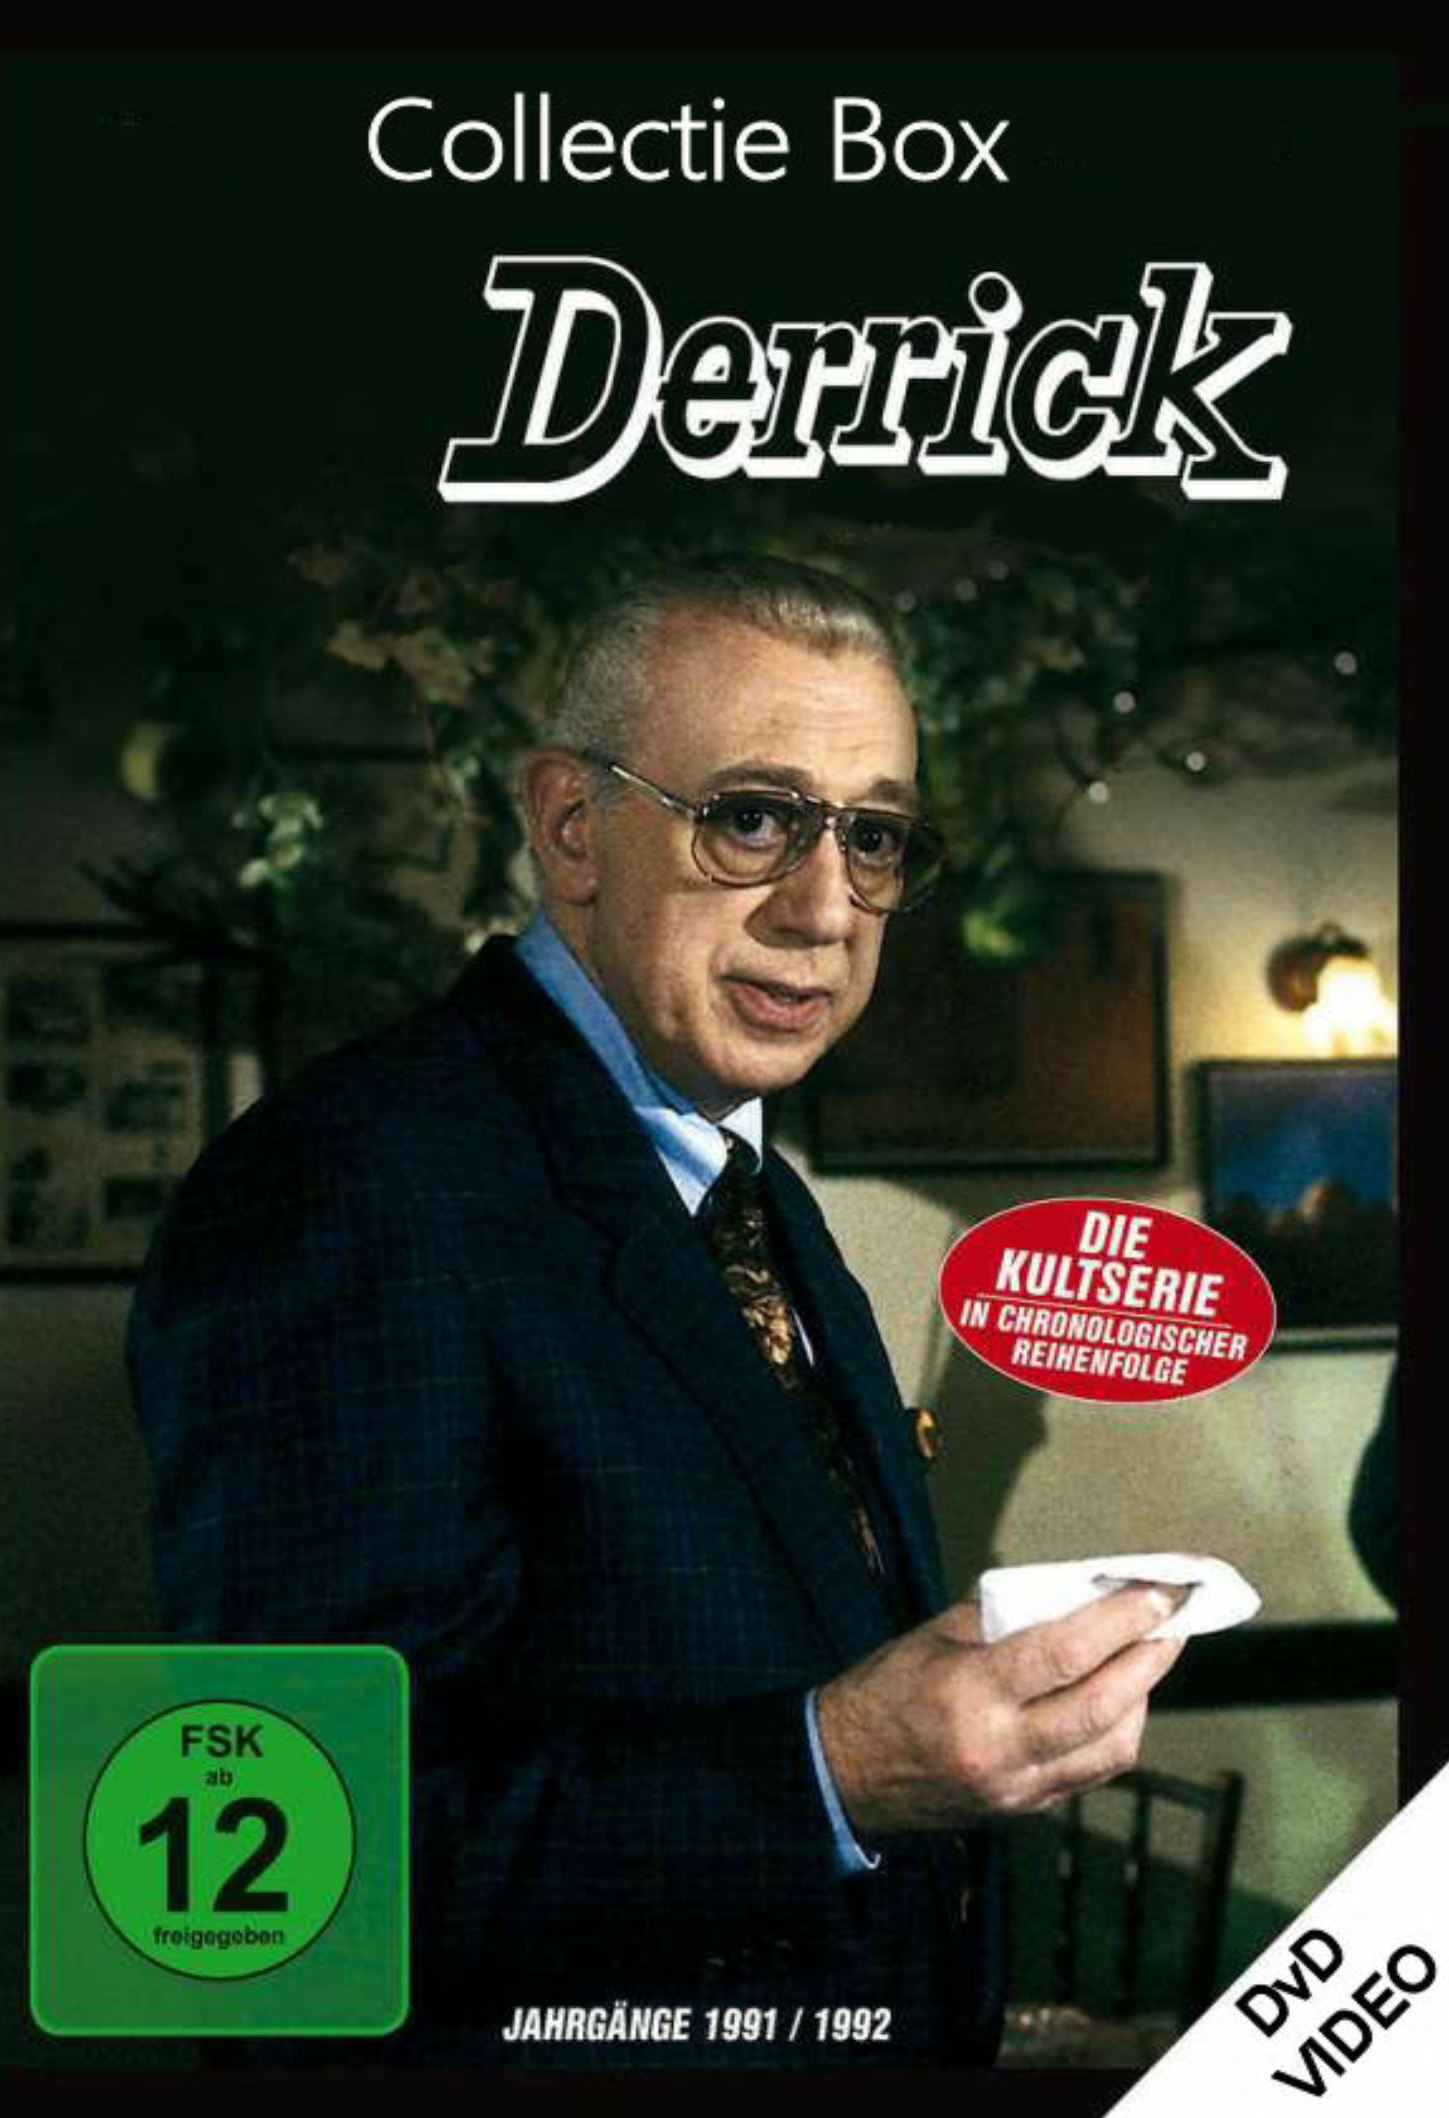 Derrick Collectie DvD 12NL subs